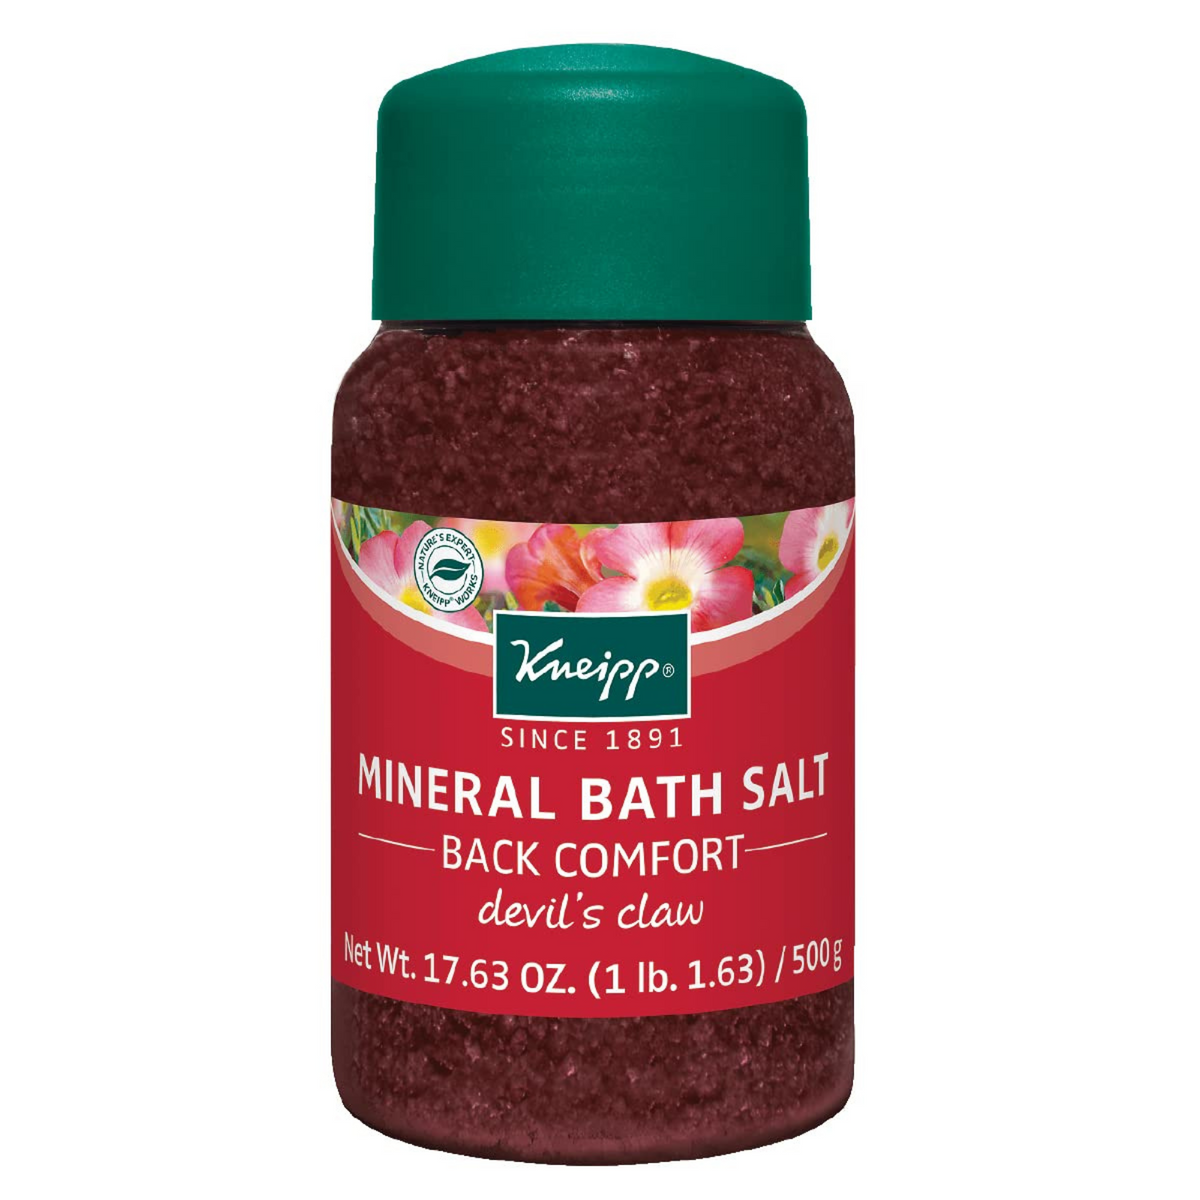 Primary Image of Kneipp Devil's Claw Back Comfort Mineral Bath Salt (17.63 oz) 